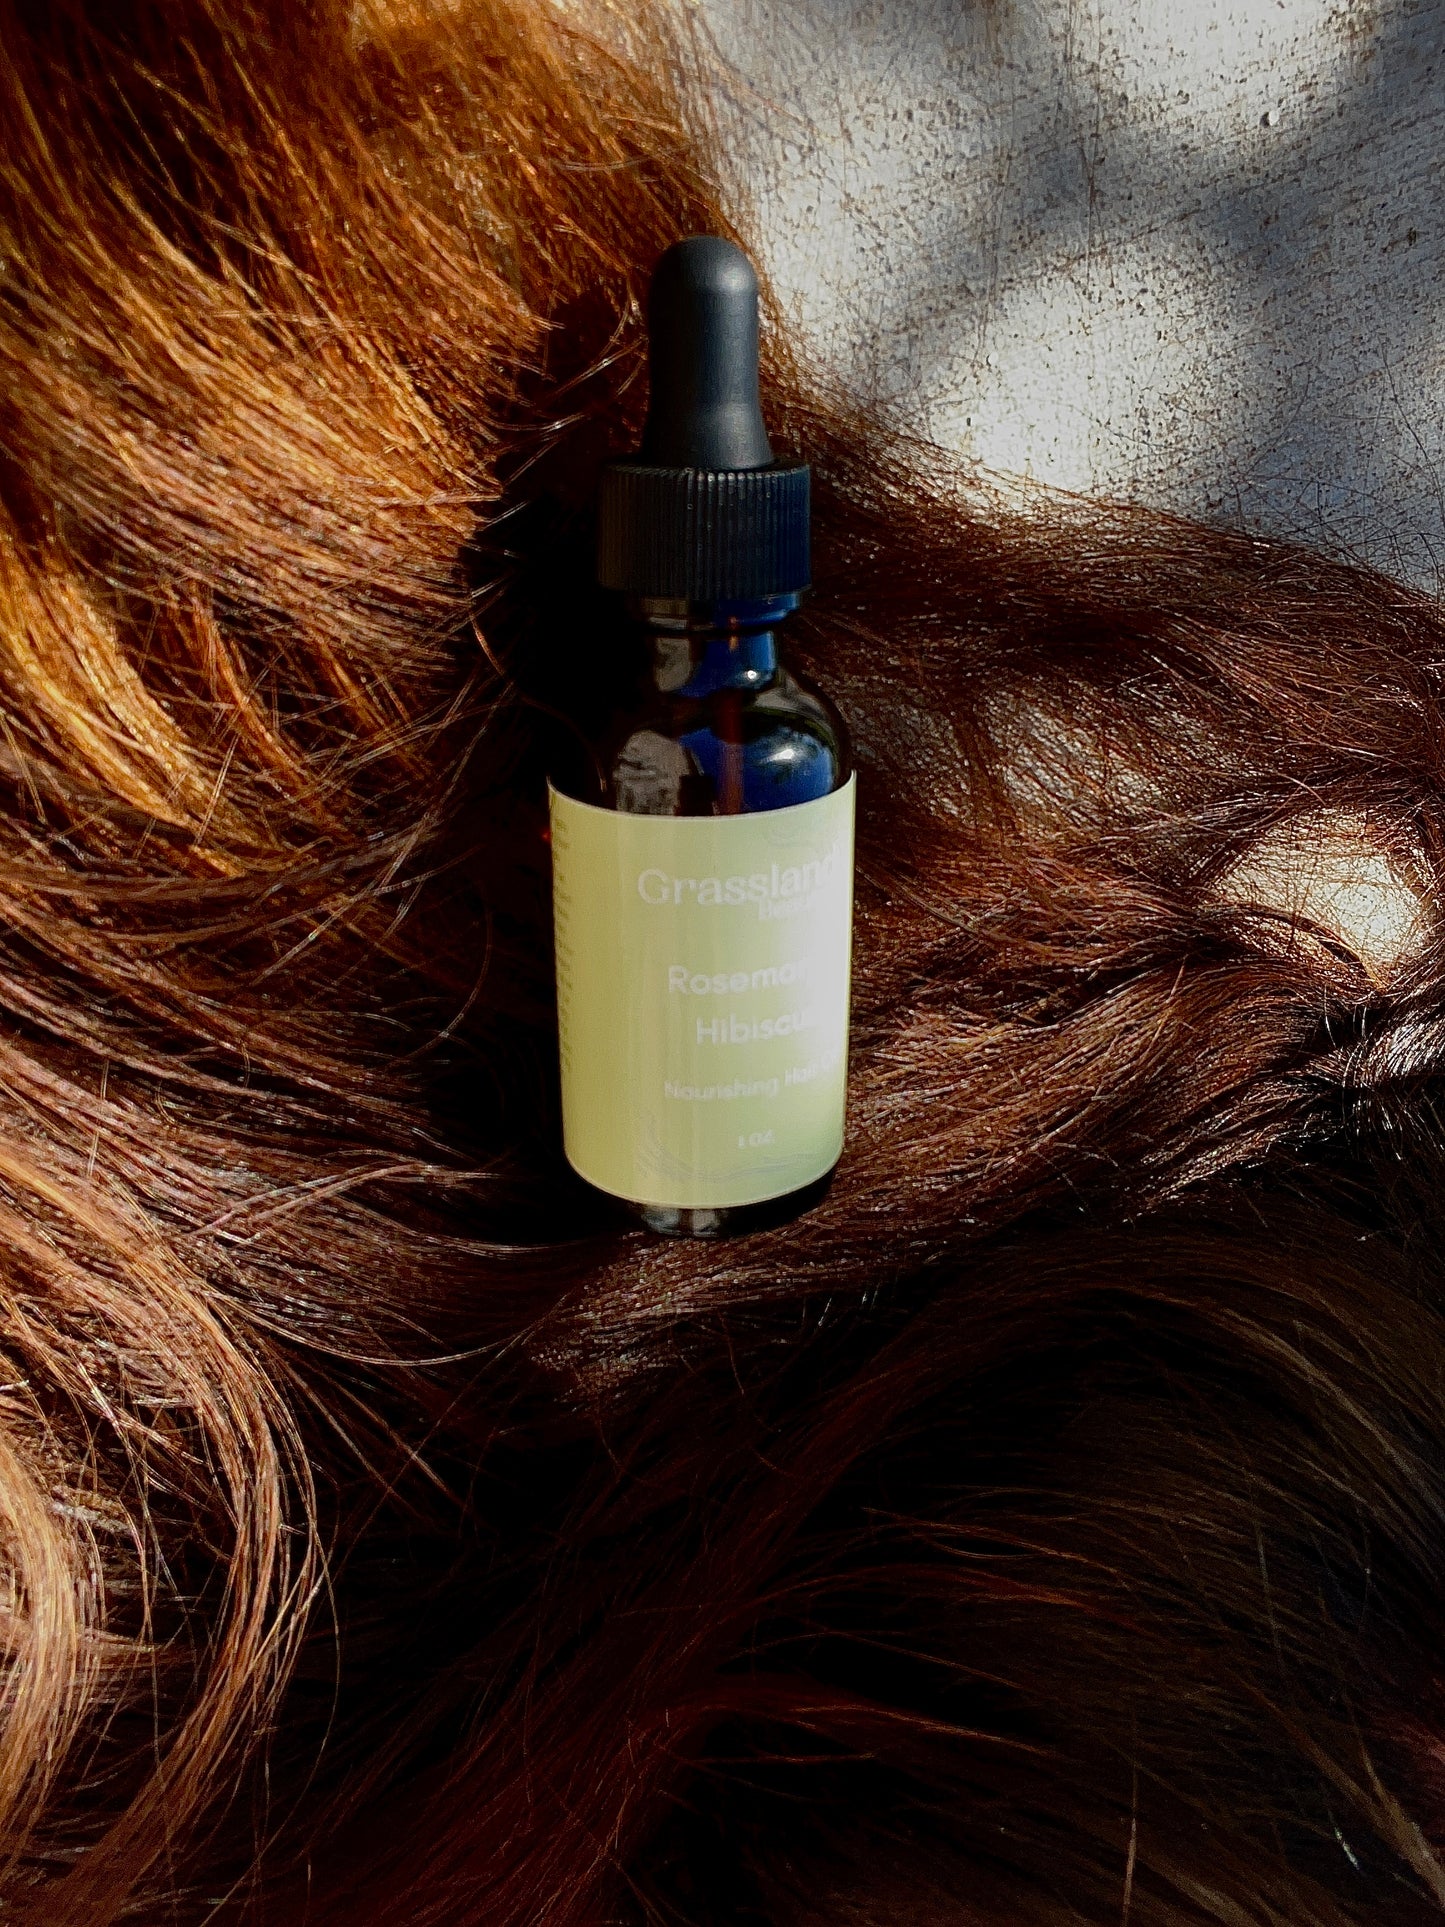 Rosemary & Hibiscus hair oil